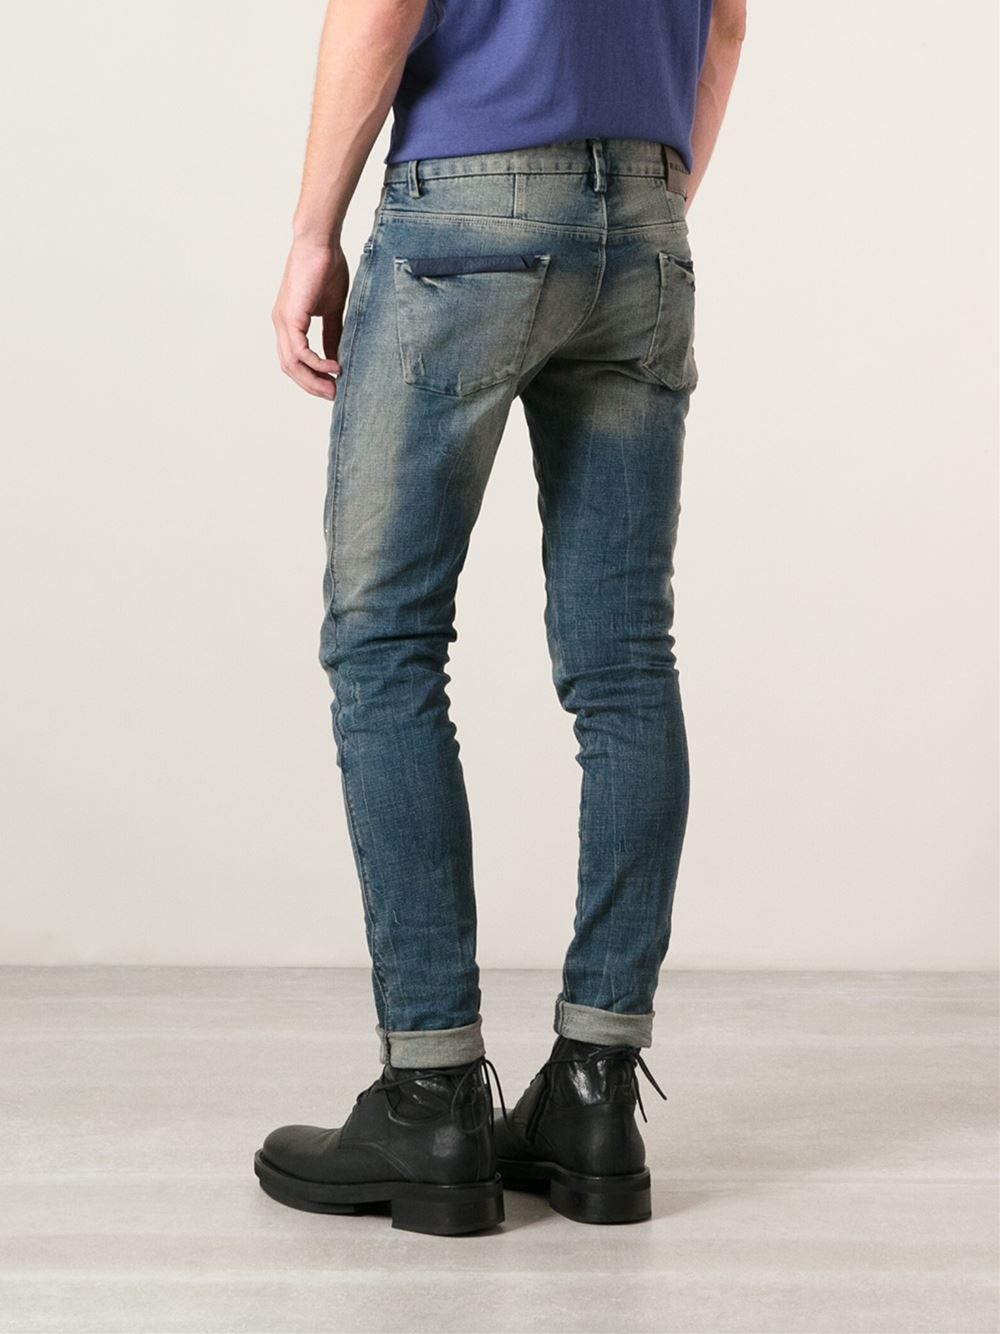 Emporio Armani Skinny Jeans in Blue for Men - Lyst